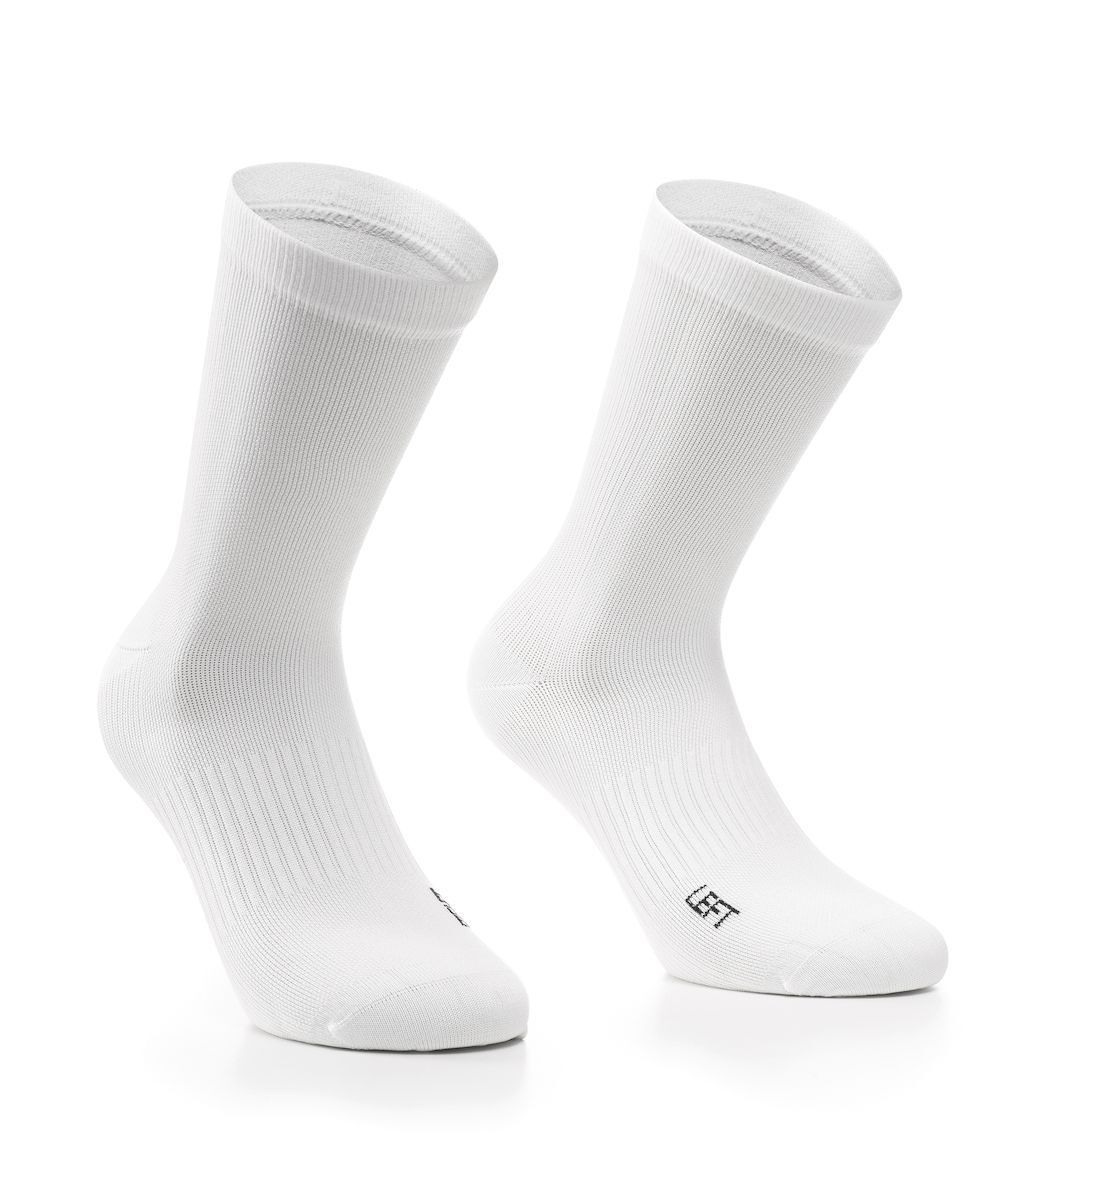 Assos Essence Socks High twin pack - Cycling socks